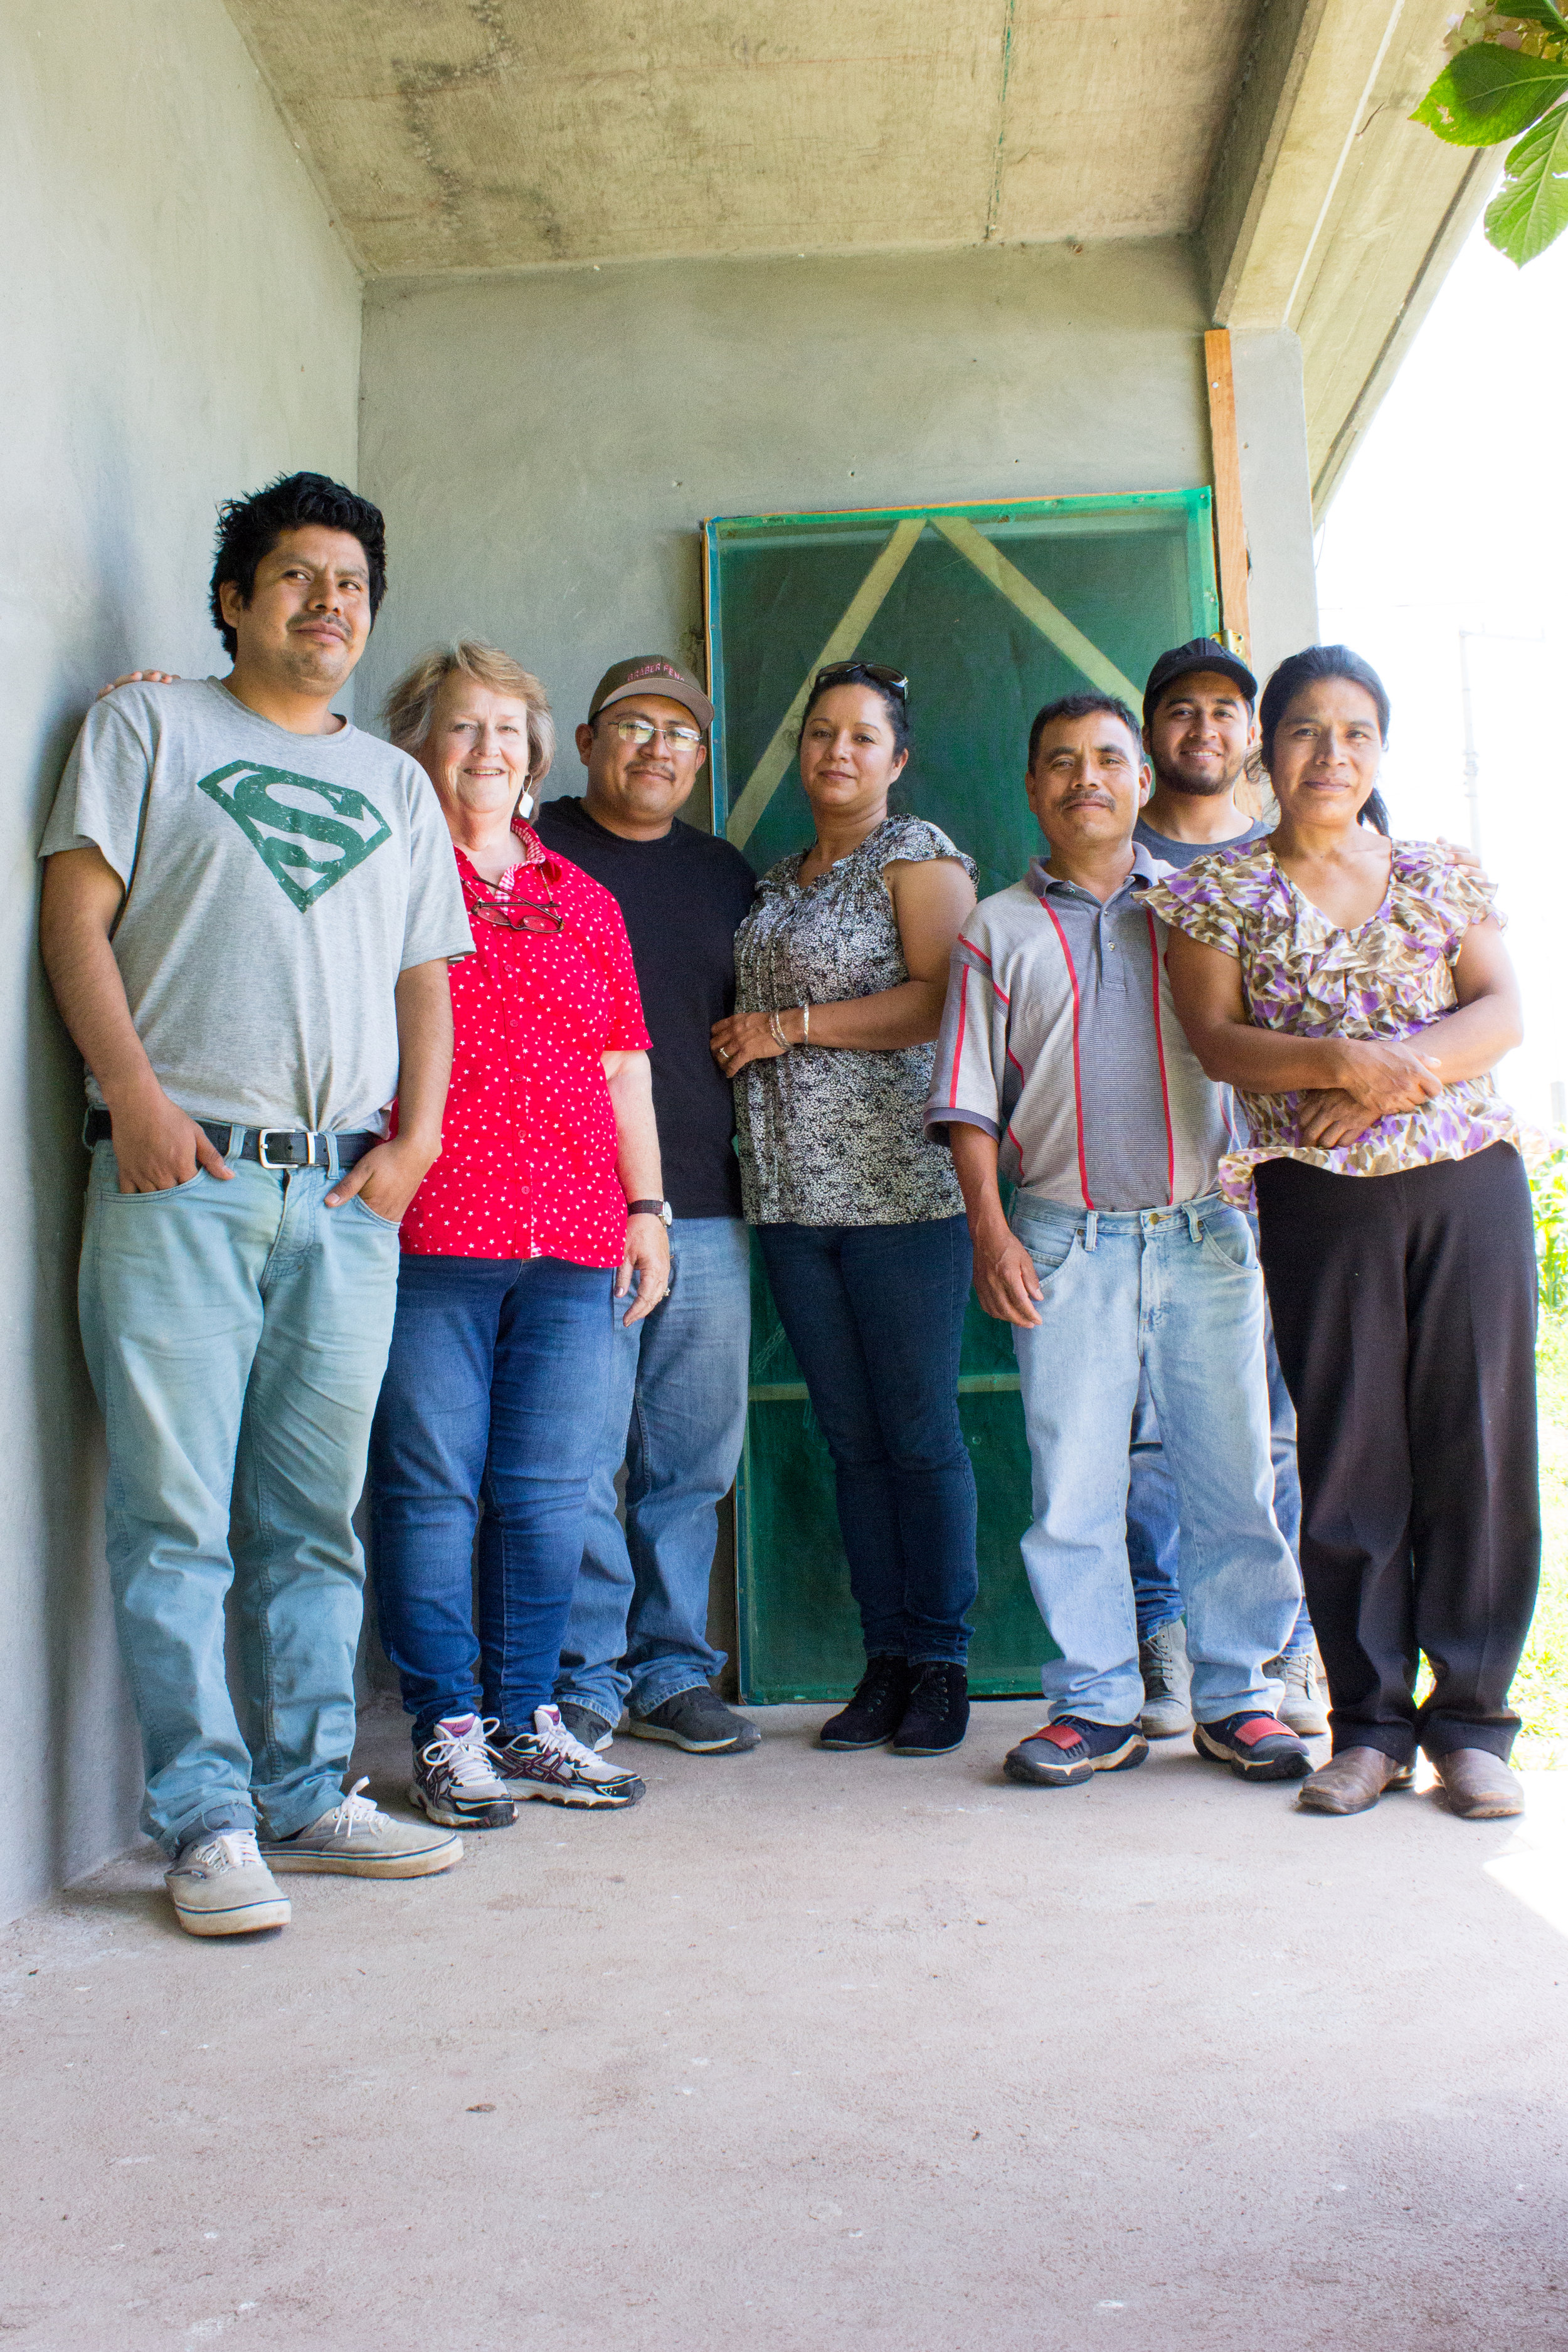  From left, Beni and Nati’s son, Ilene, Junior, Maria, Beni, Manuel and Nati. 